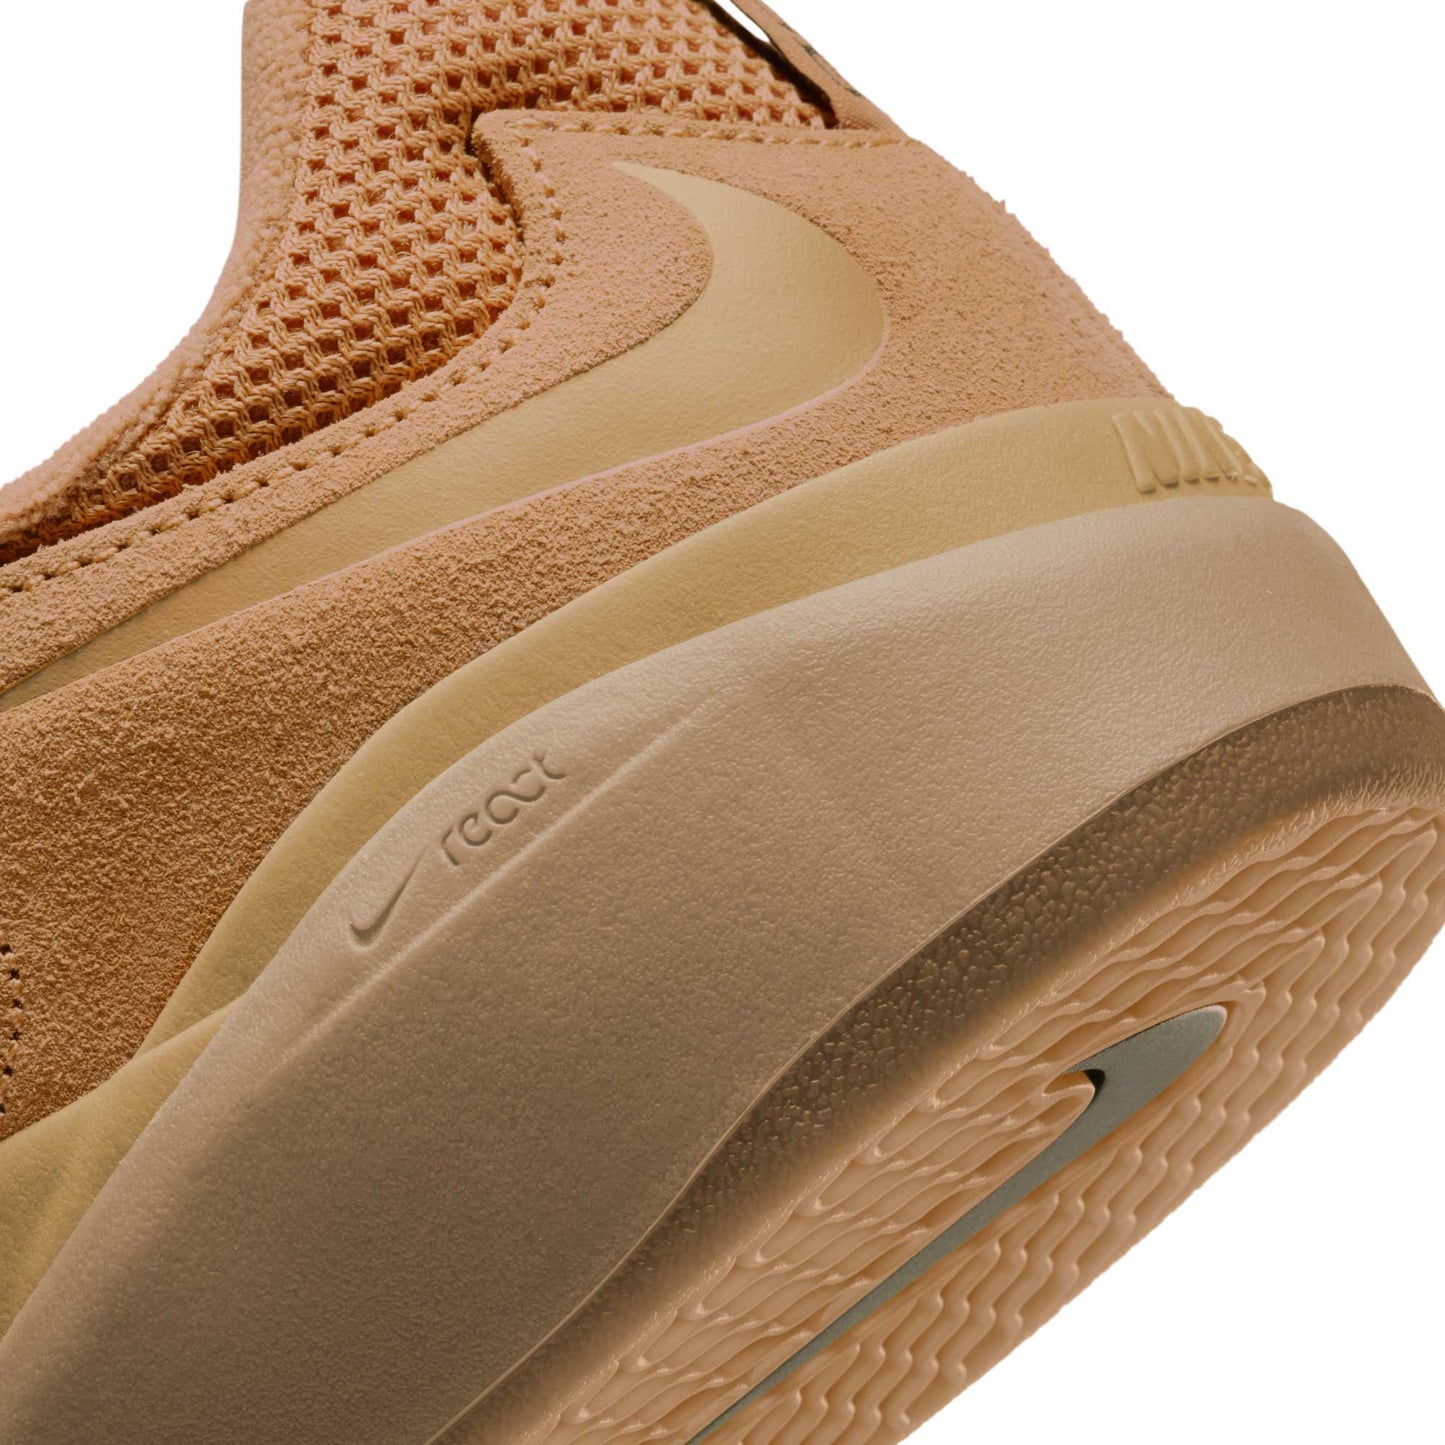 Nike SB Ishod Wair, flax/wheat-flax-gum light brown - Tiki Room Skateboards - 10